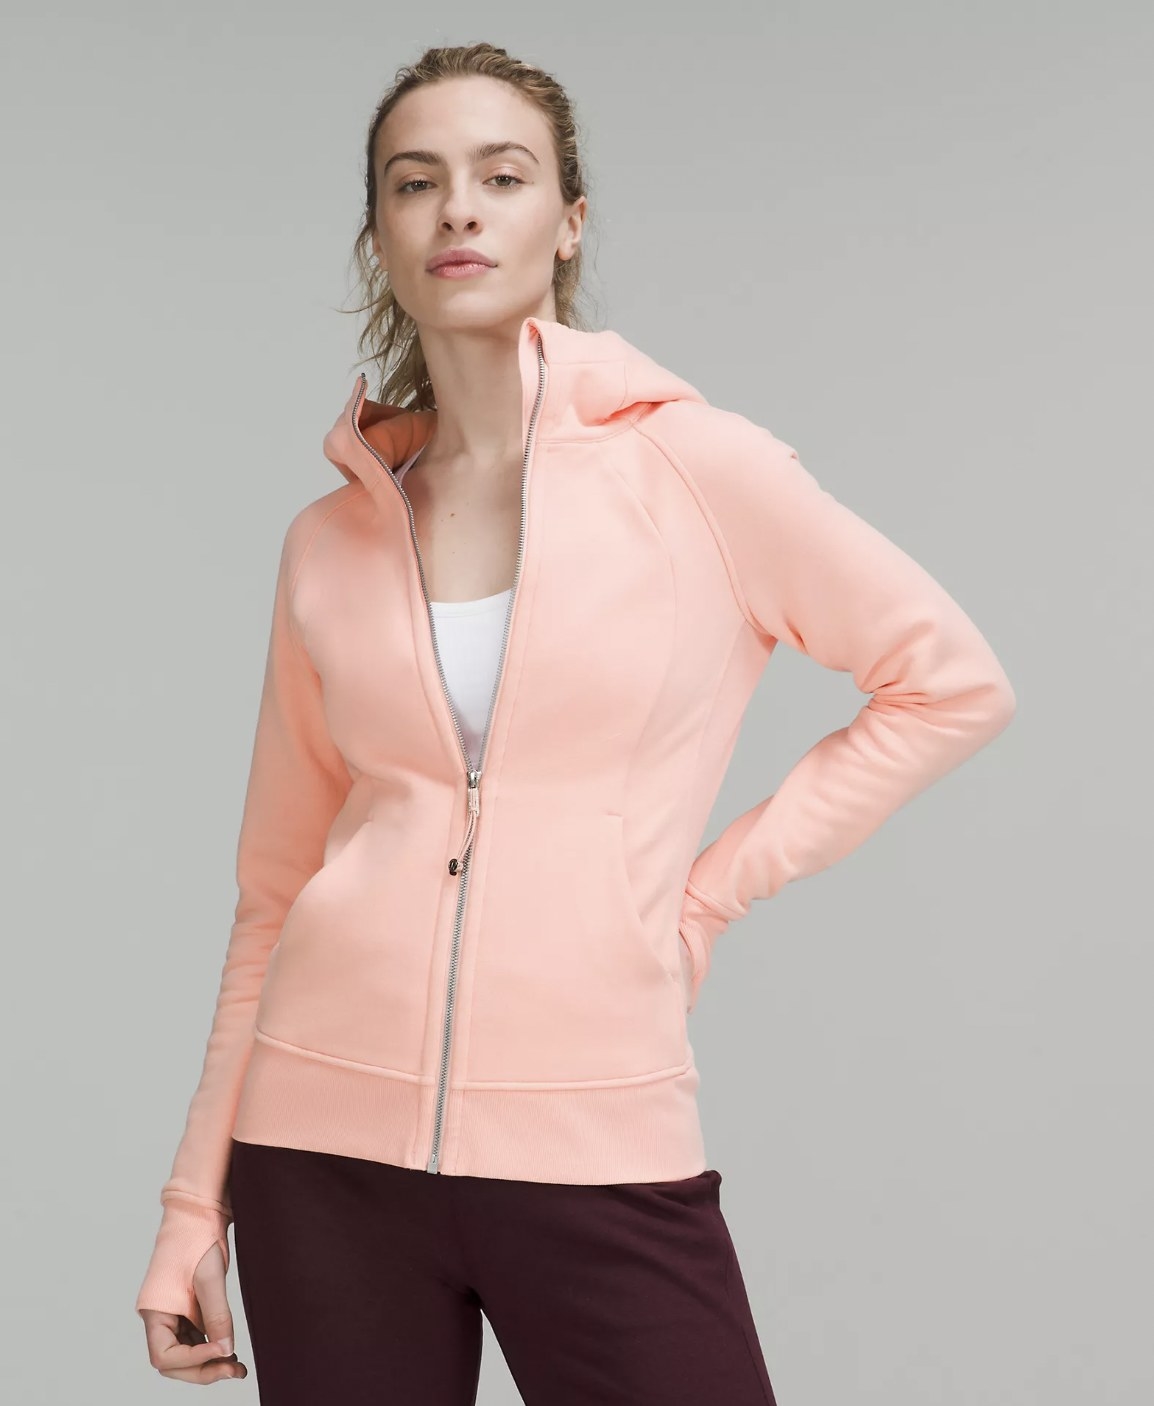 Model wearing the peach full zip sweatshirt over a white tank